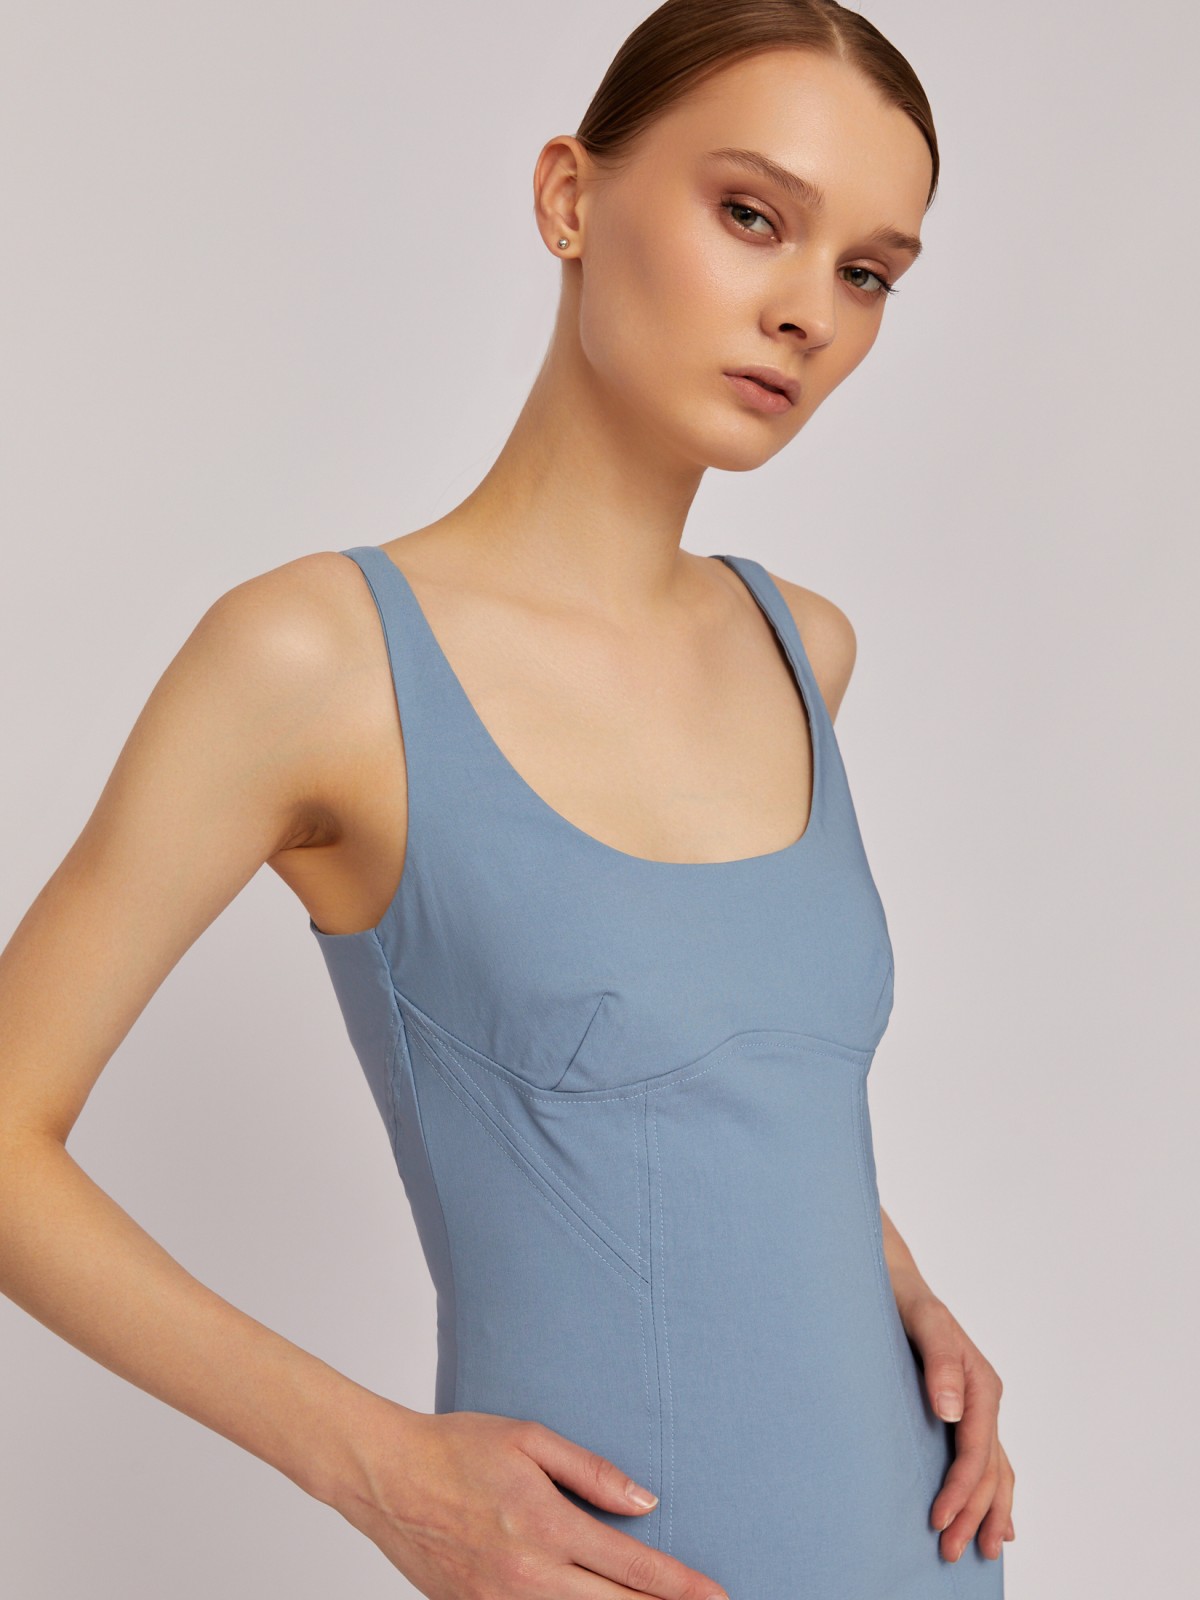 Платье-футляр без рукавов с имитацией корсета zolla 02425824Y091, цвет голубой, размер XS - фото 4